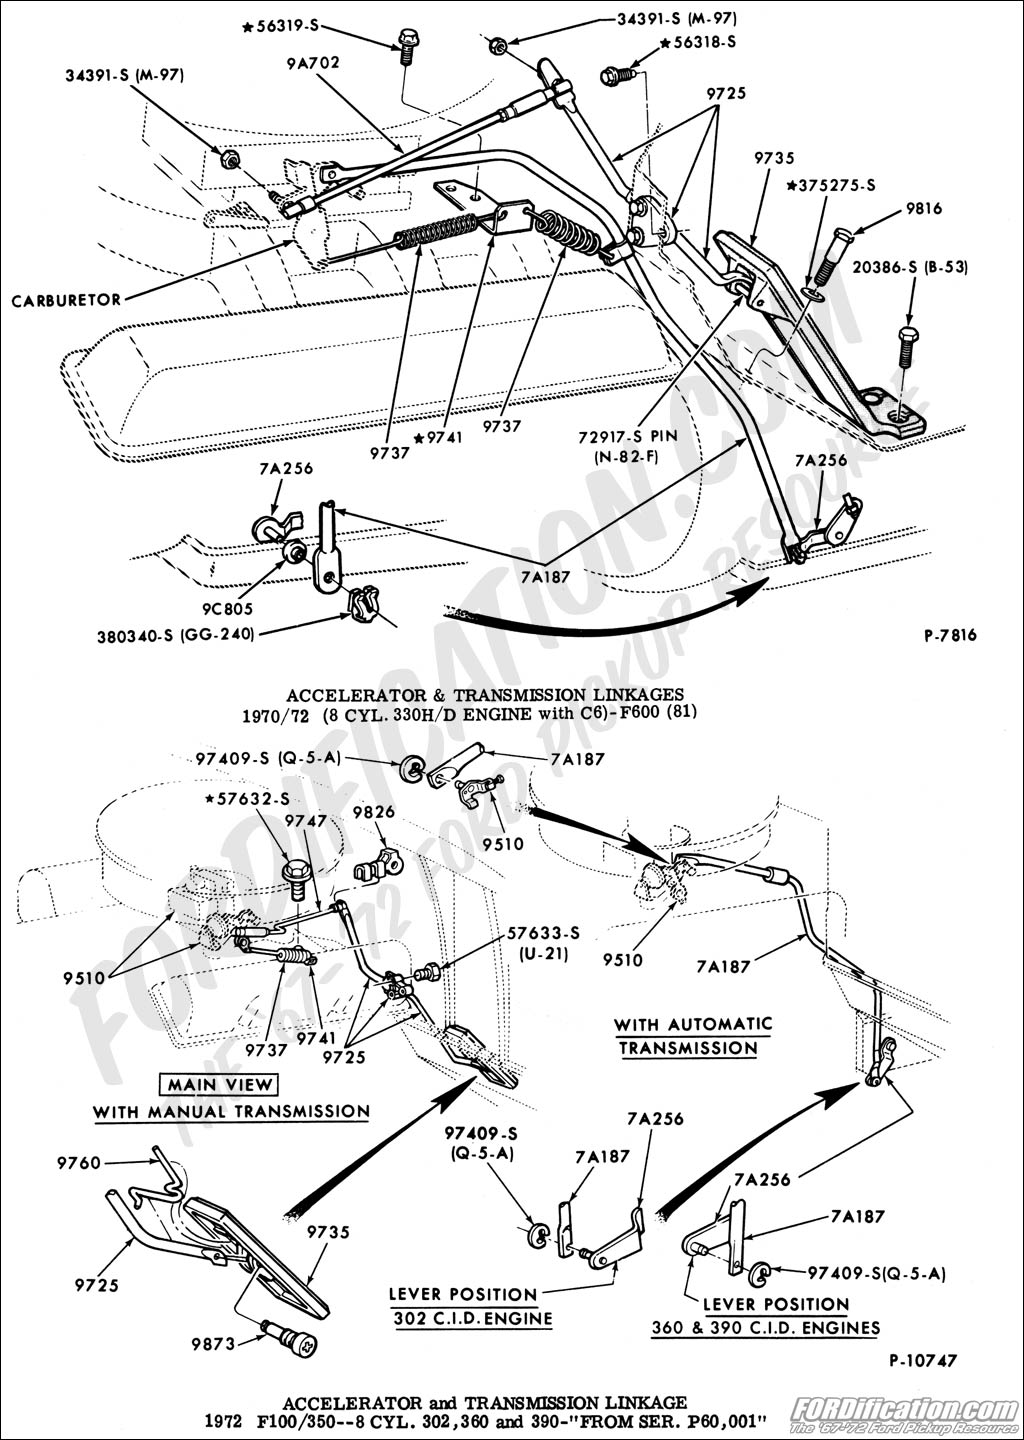 Ford c6 transmission kickdown adjustment #2